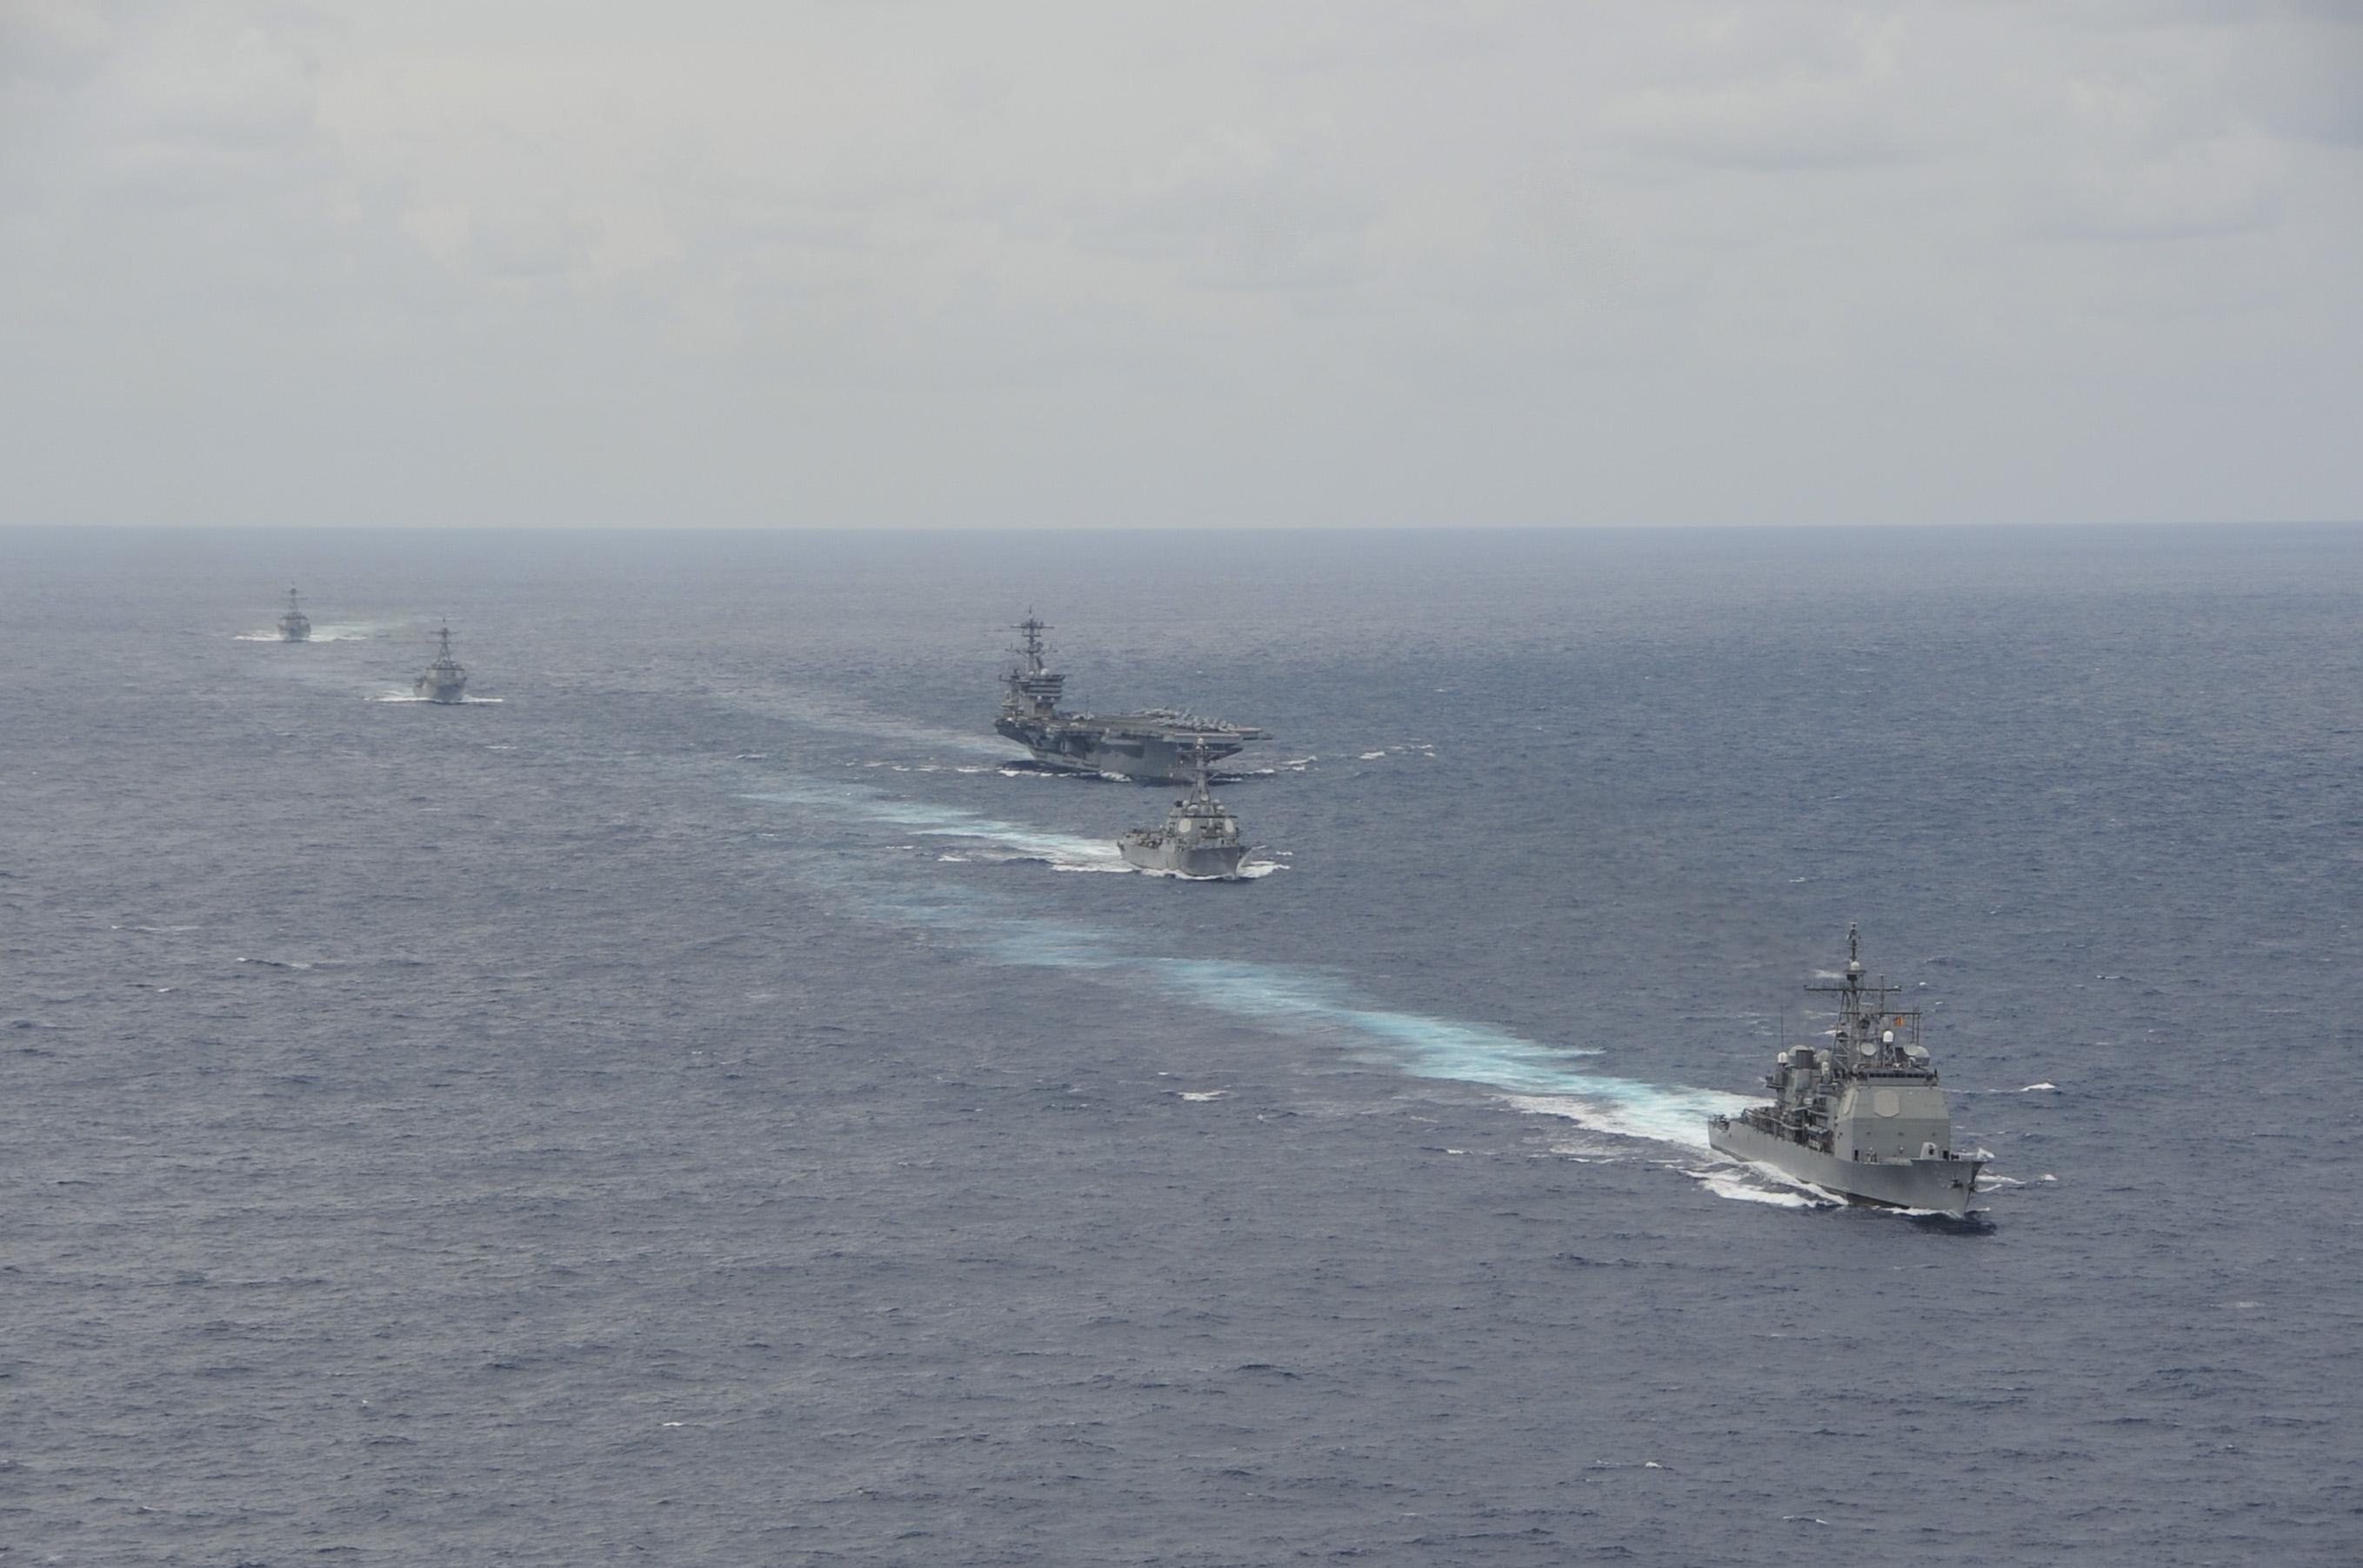 USS THEODORE ROOSEVELT CVN-71 Carrier Strike Group am 20.09.2014 im Atlantik Bild: U.S. Navy